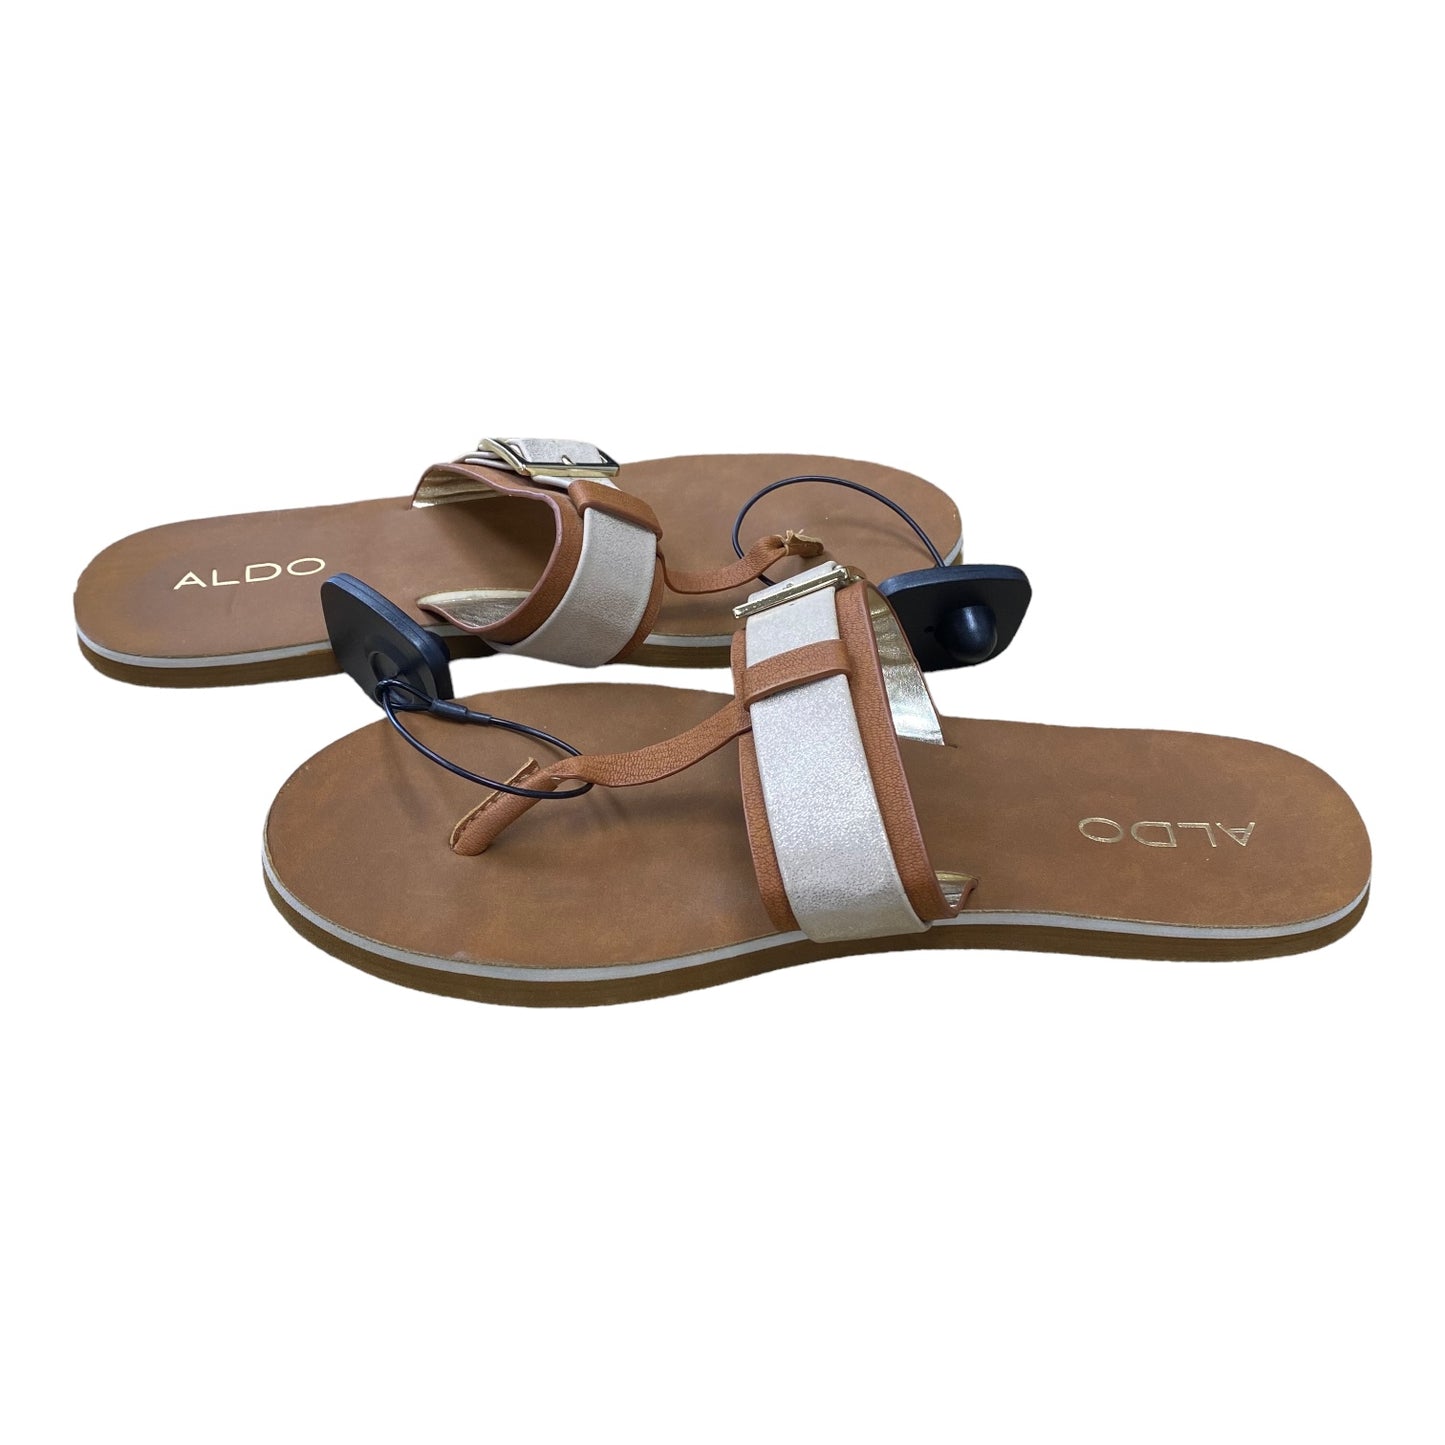 Sandals Flip Flops By Aldo  Size: 9